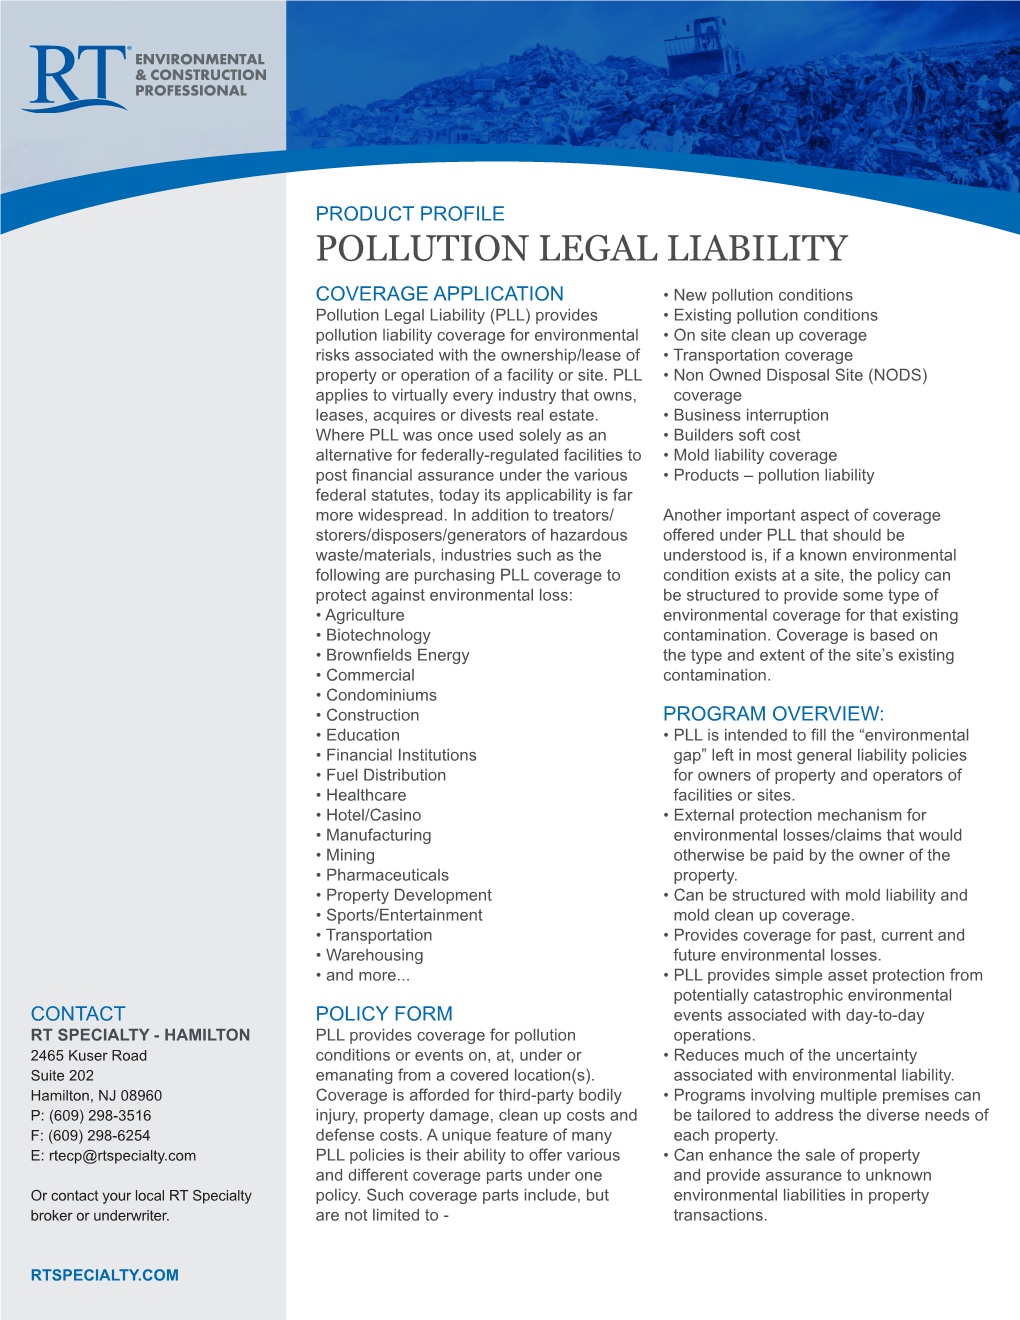 Pollution Legal Liability